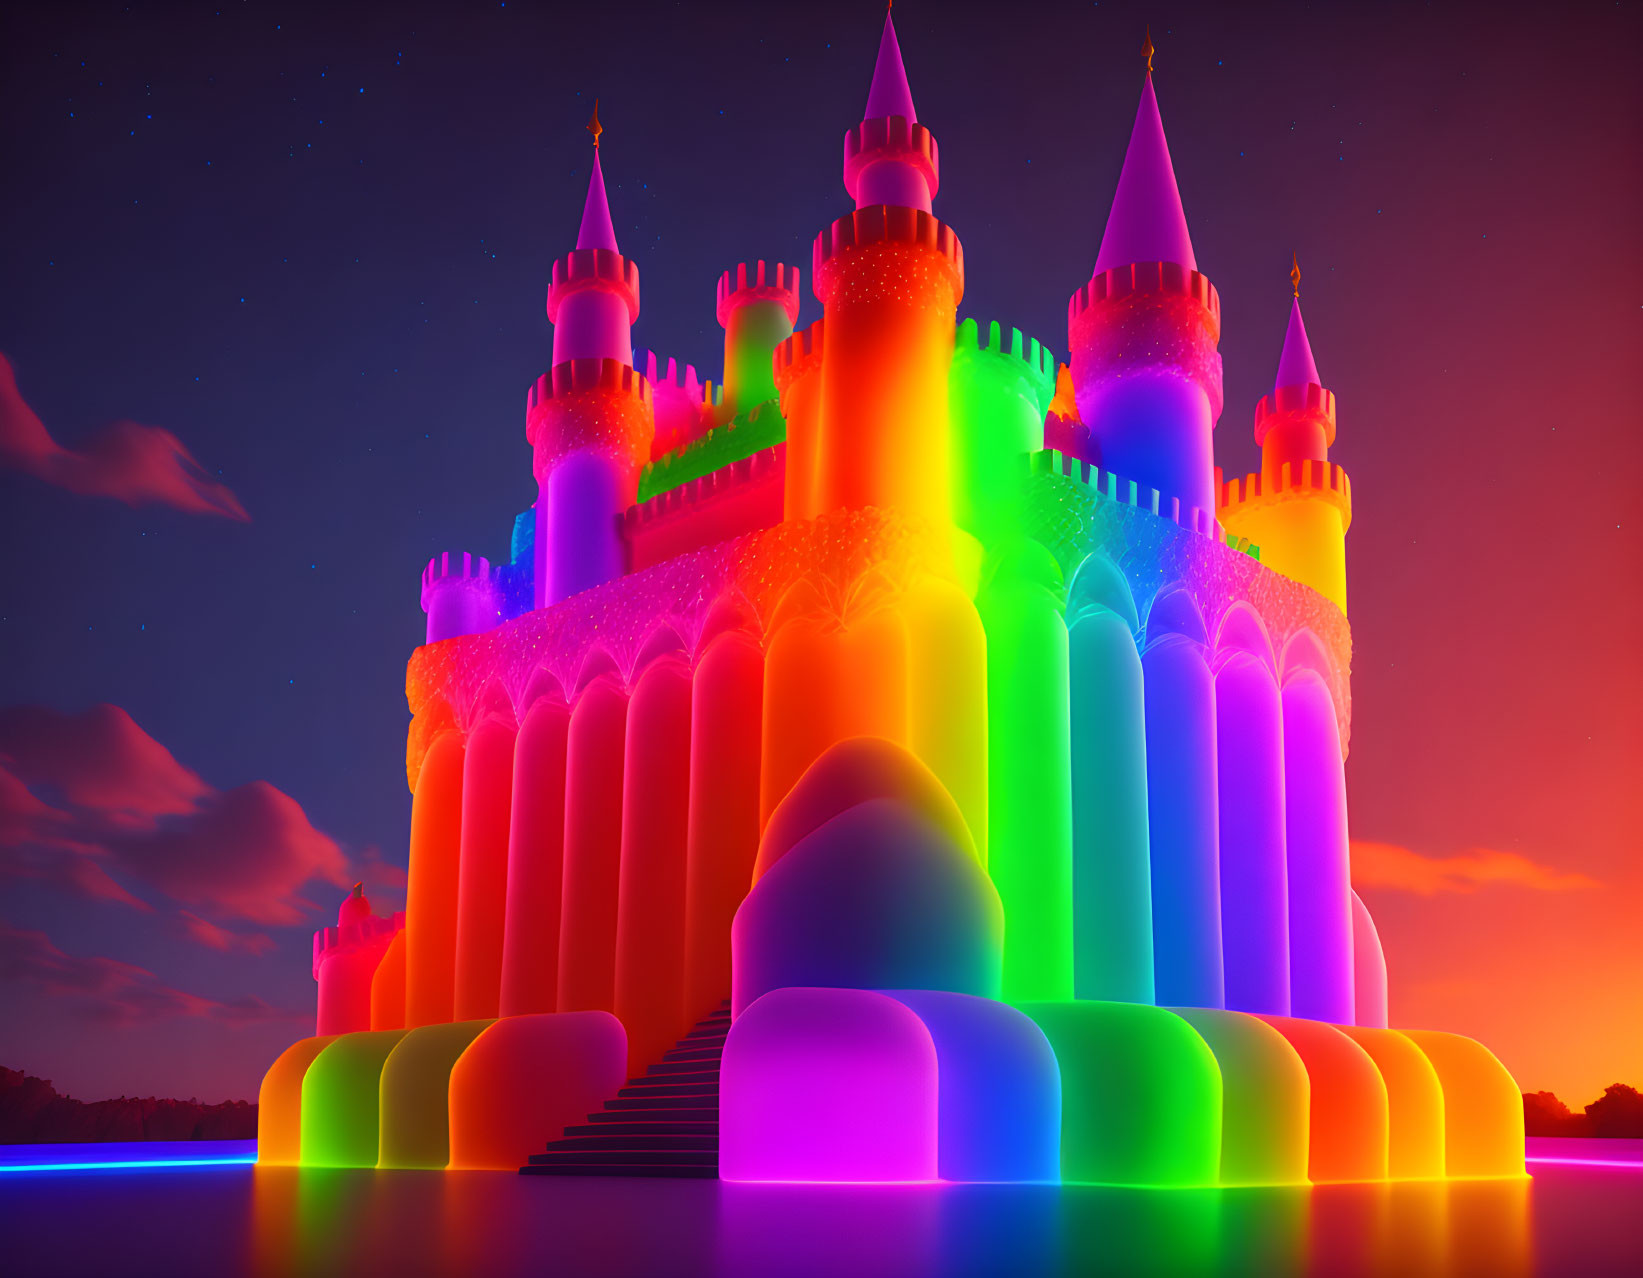 Neon Fairytale Castle Artwork in Dusk Sky